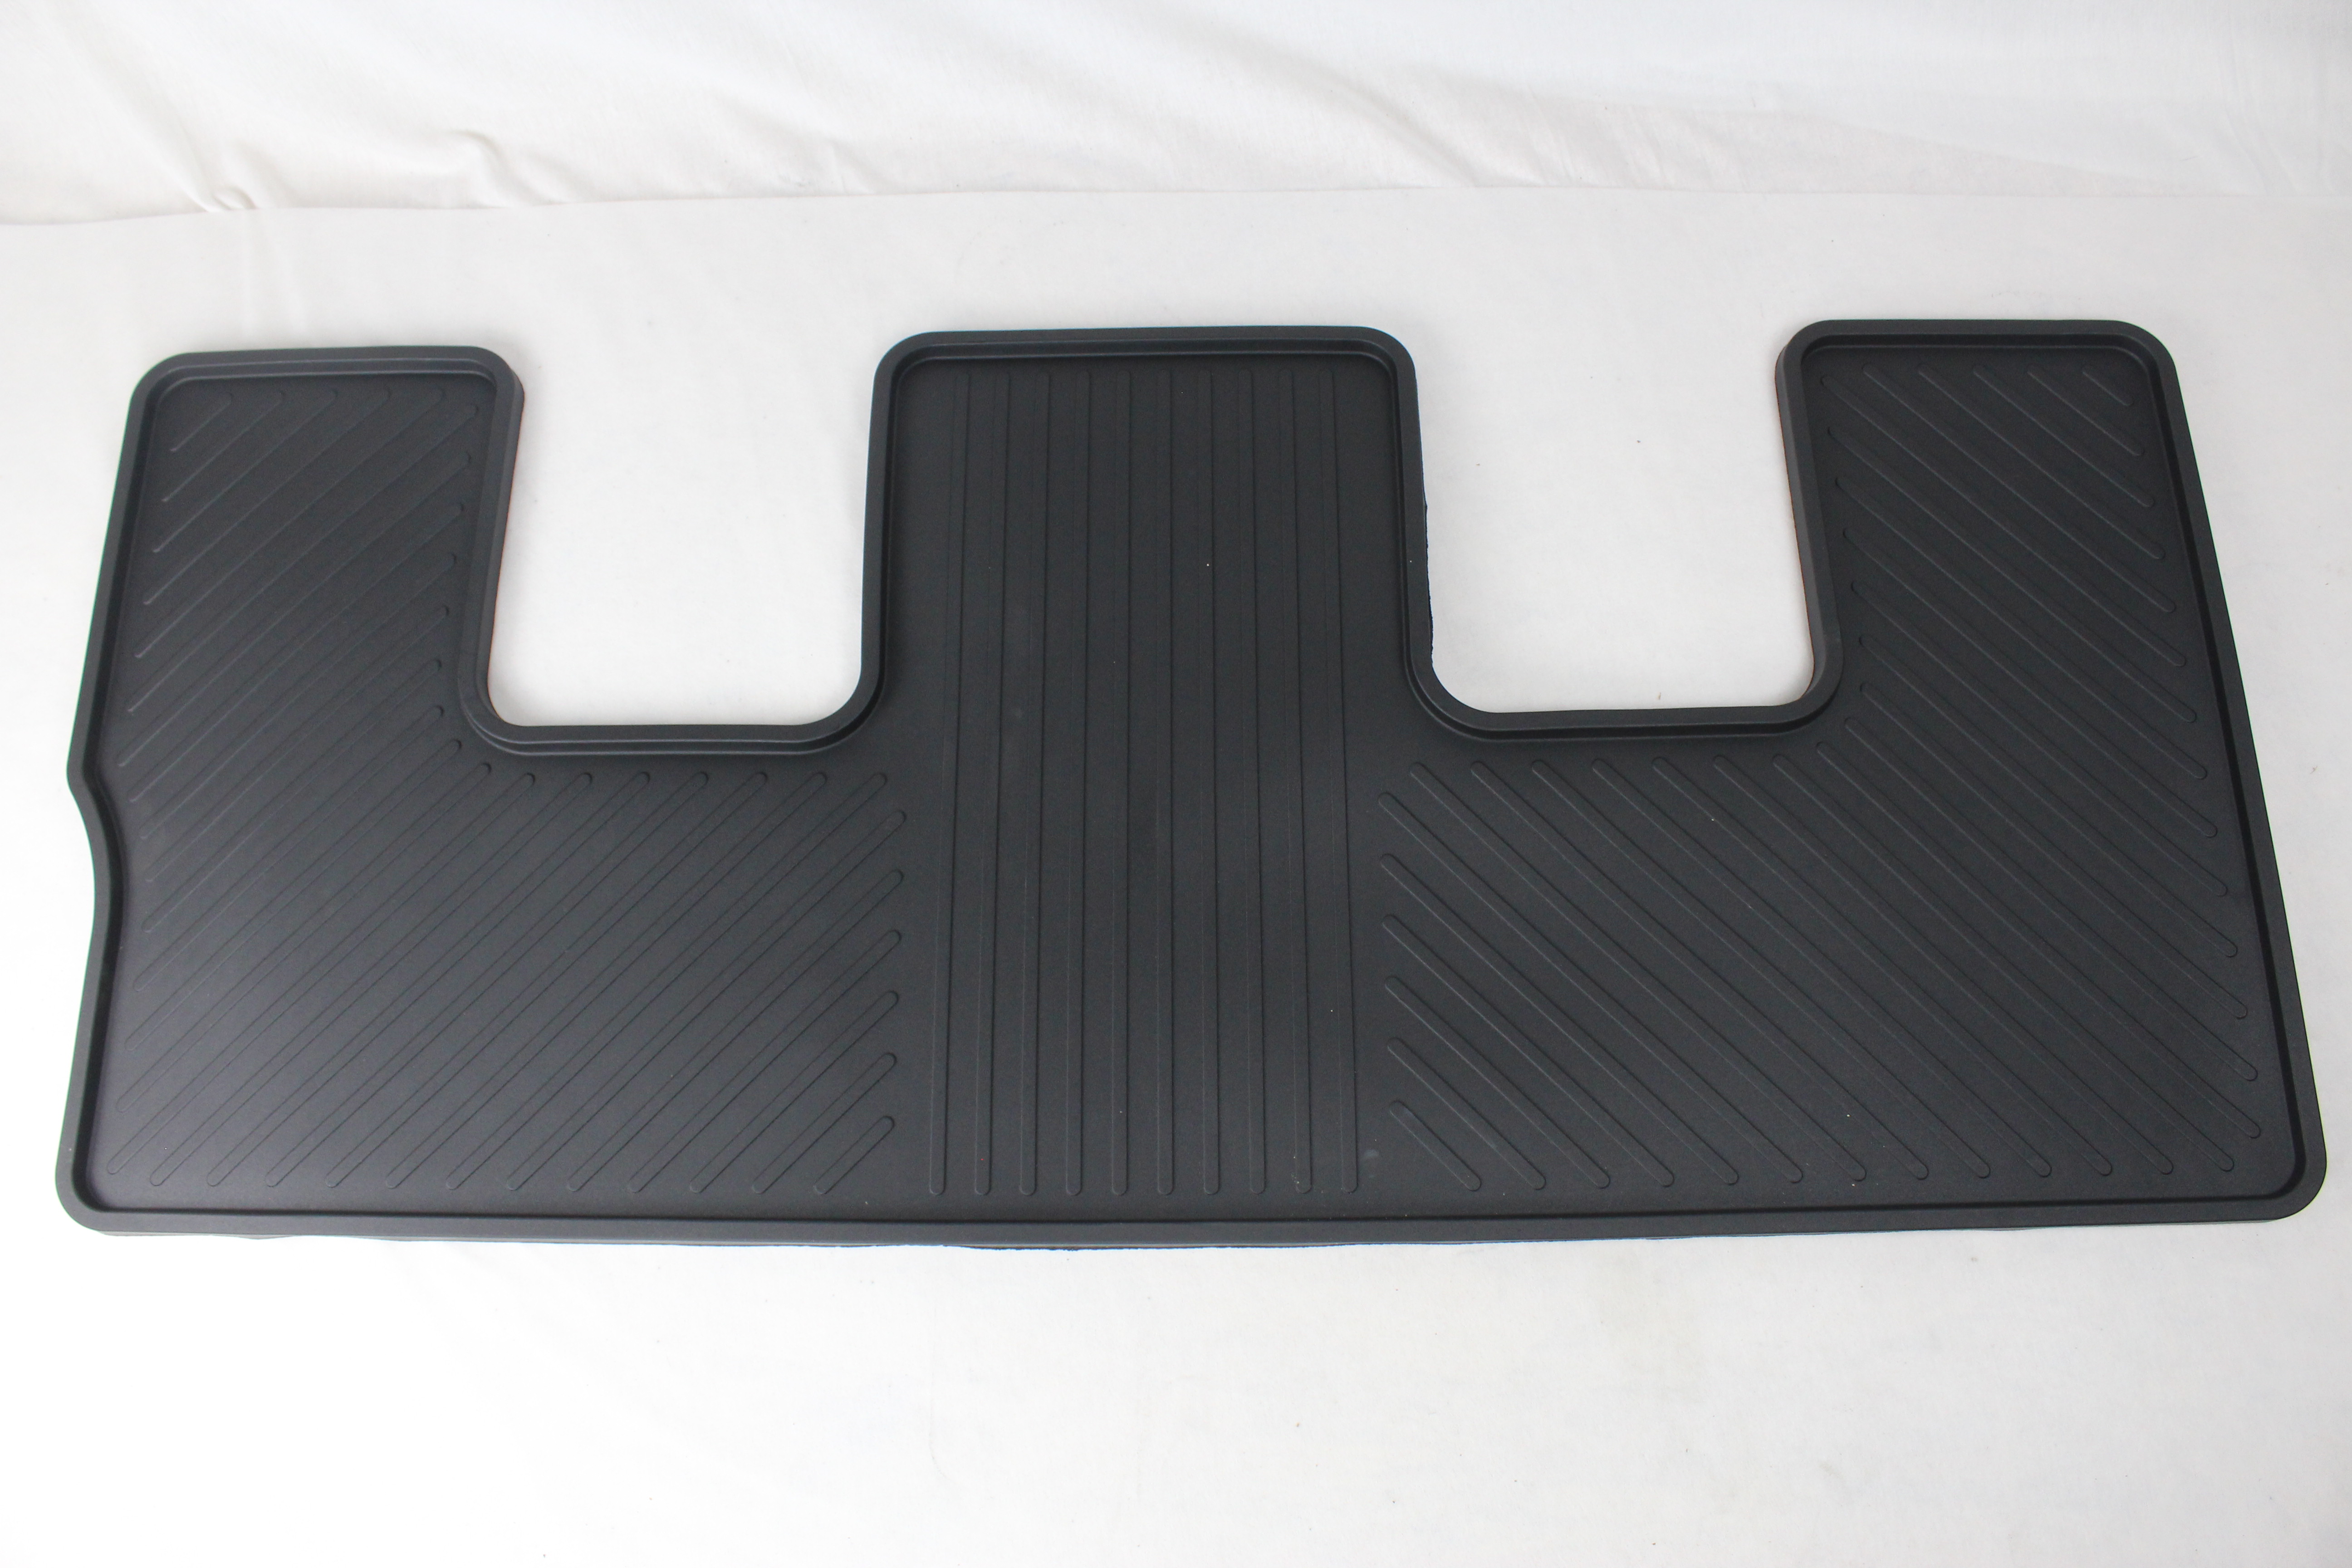 Fußmatte hinten 3. Sitzreihe Gummi Ford S-Max - | KFZ-Teileprofi Galaxy